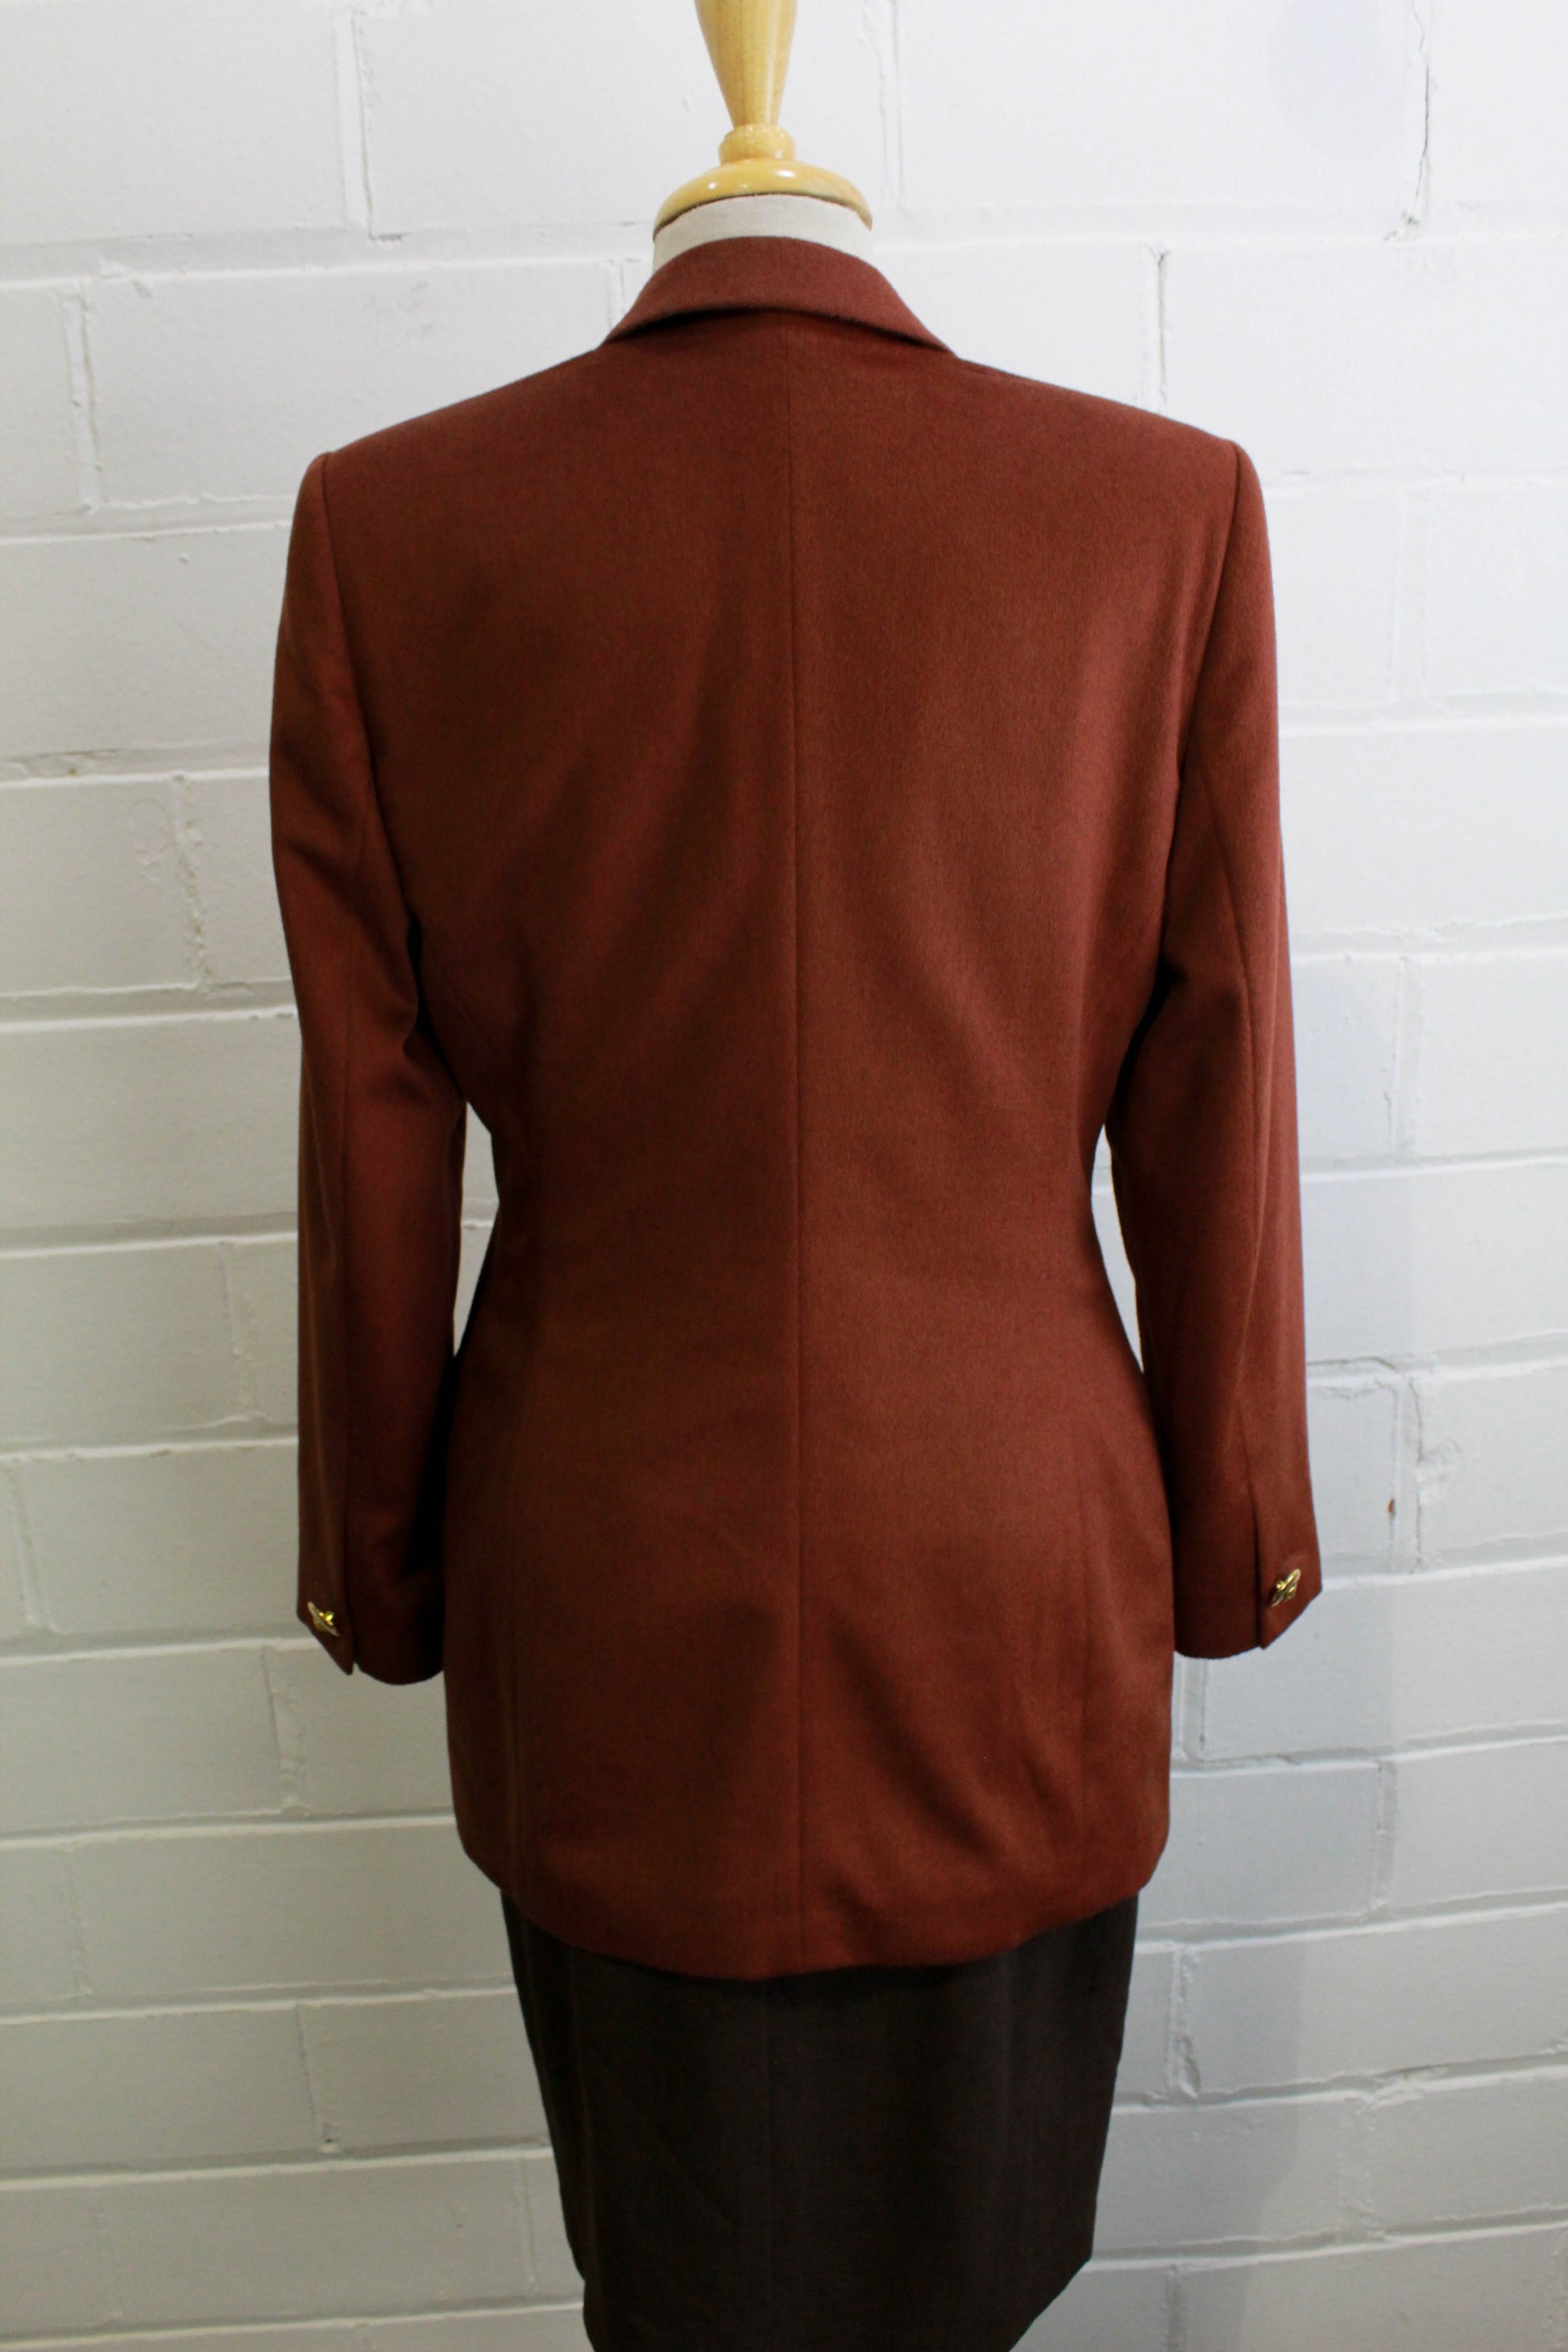 Jackets & Coats, Escada Womens Wool Cashmere Coat Pink